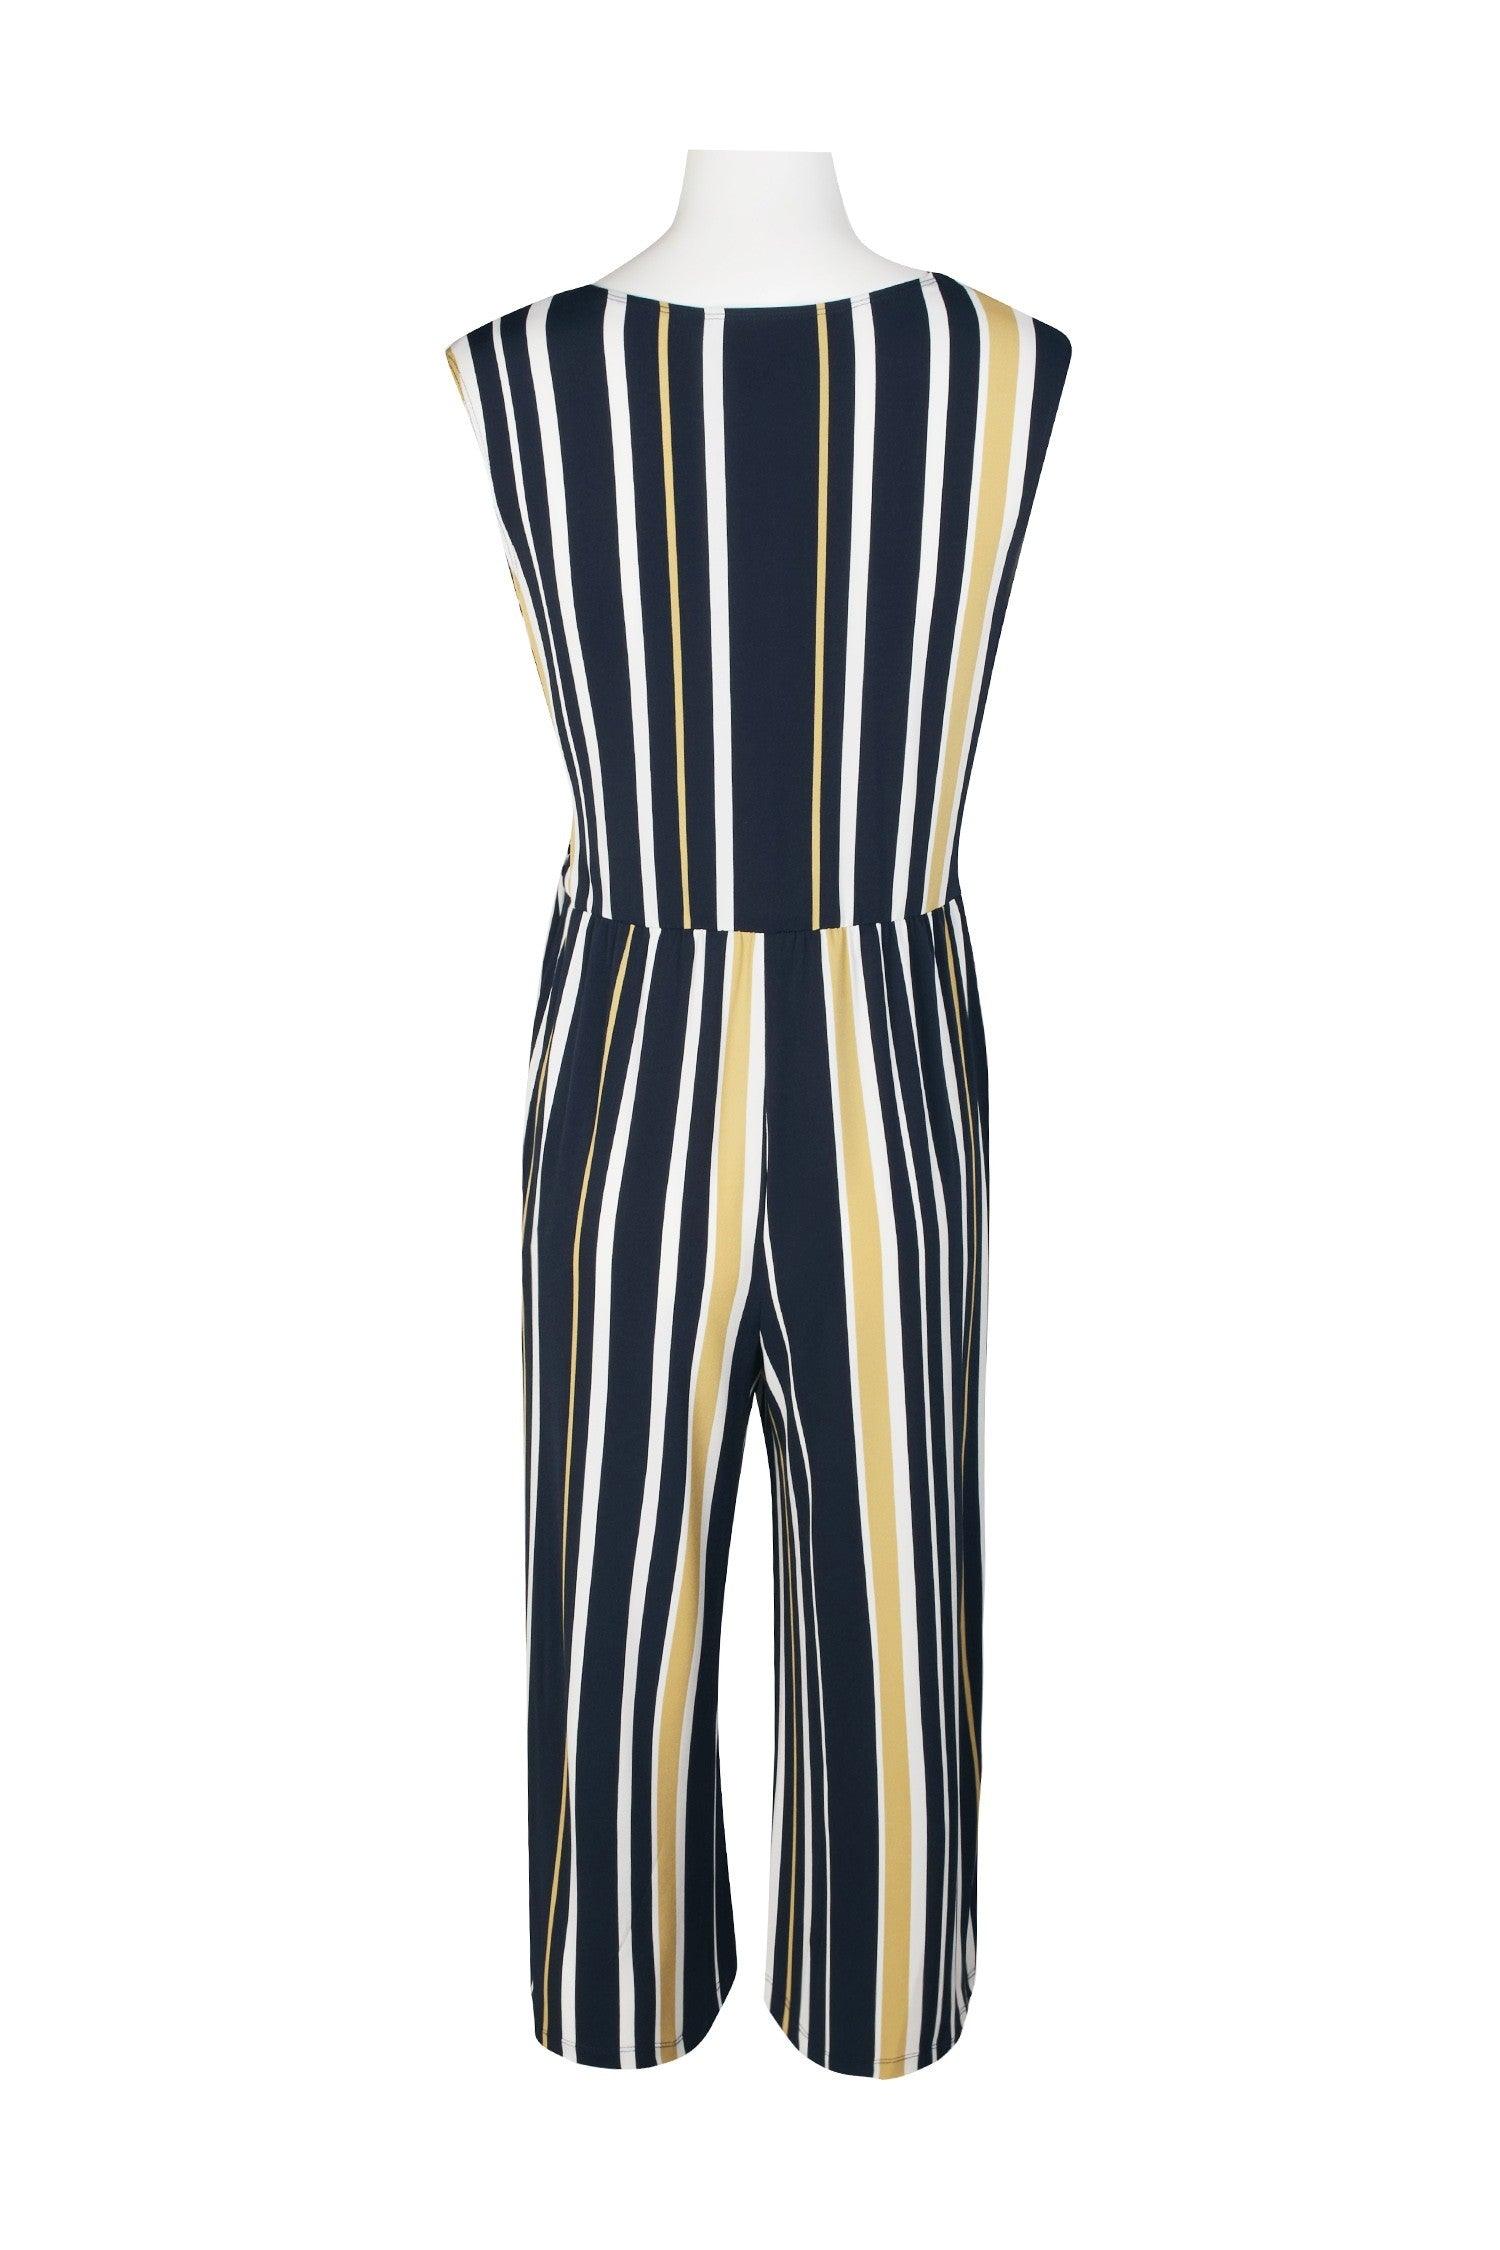 Connected Apparel Cap Sleeve Stripe Print Jumpsuit - The Dress Outlet